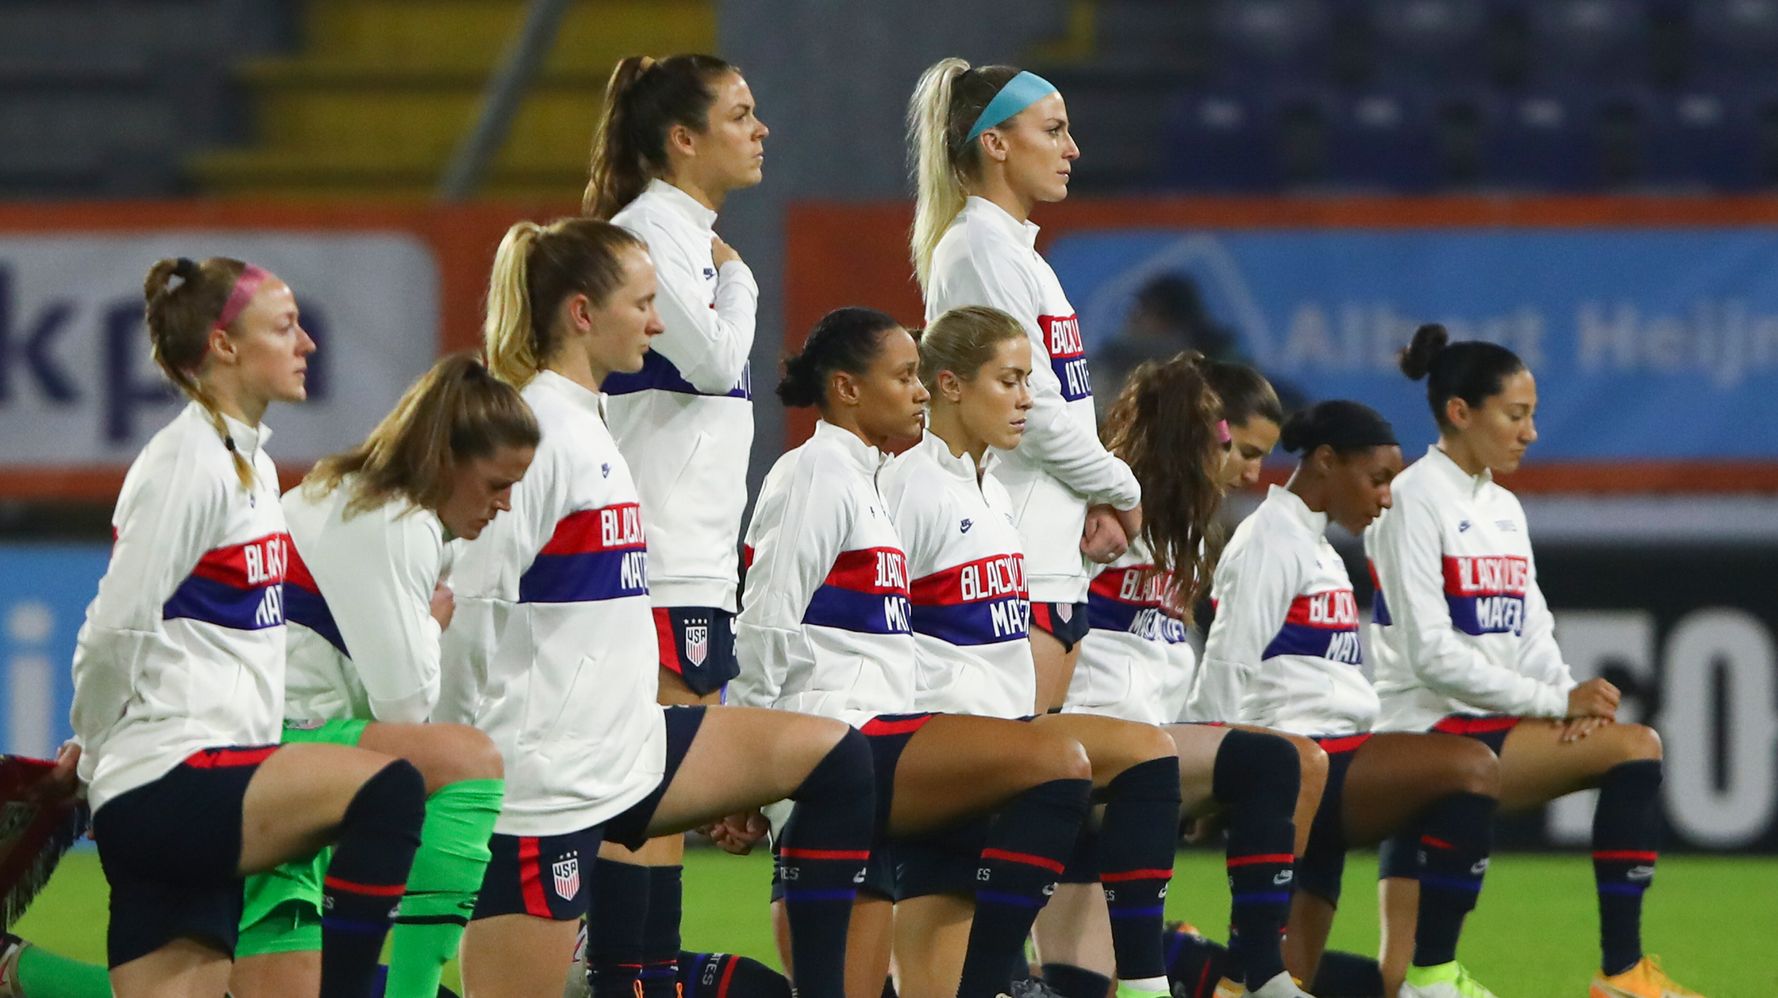 U.S. Women's Soccer Team Sports Black Lives Matter Jackets To 'Affirm Human Decency'